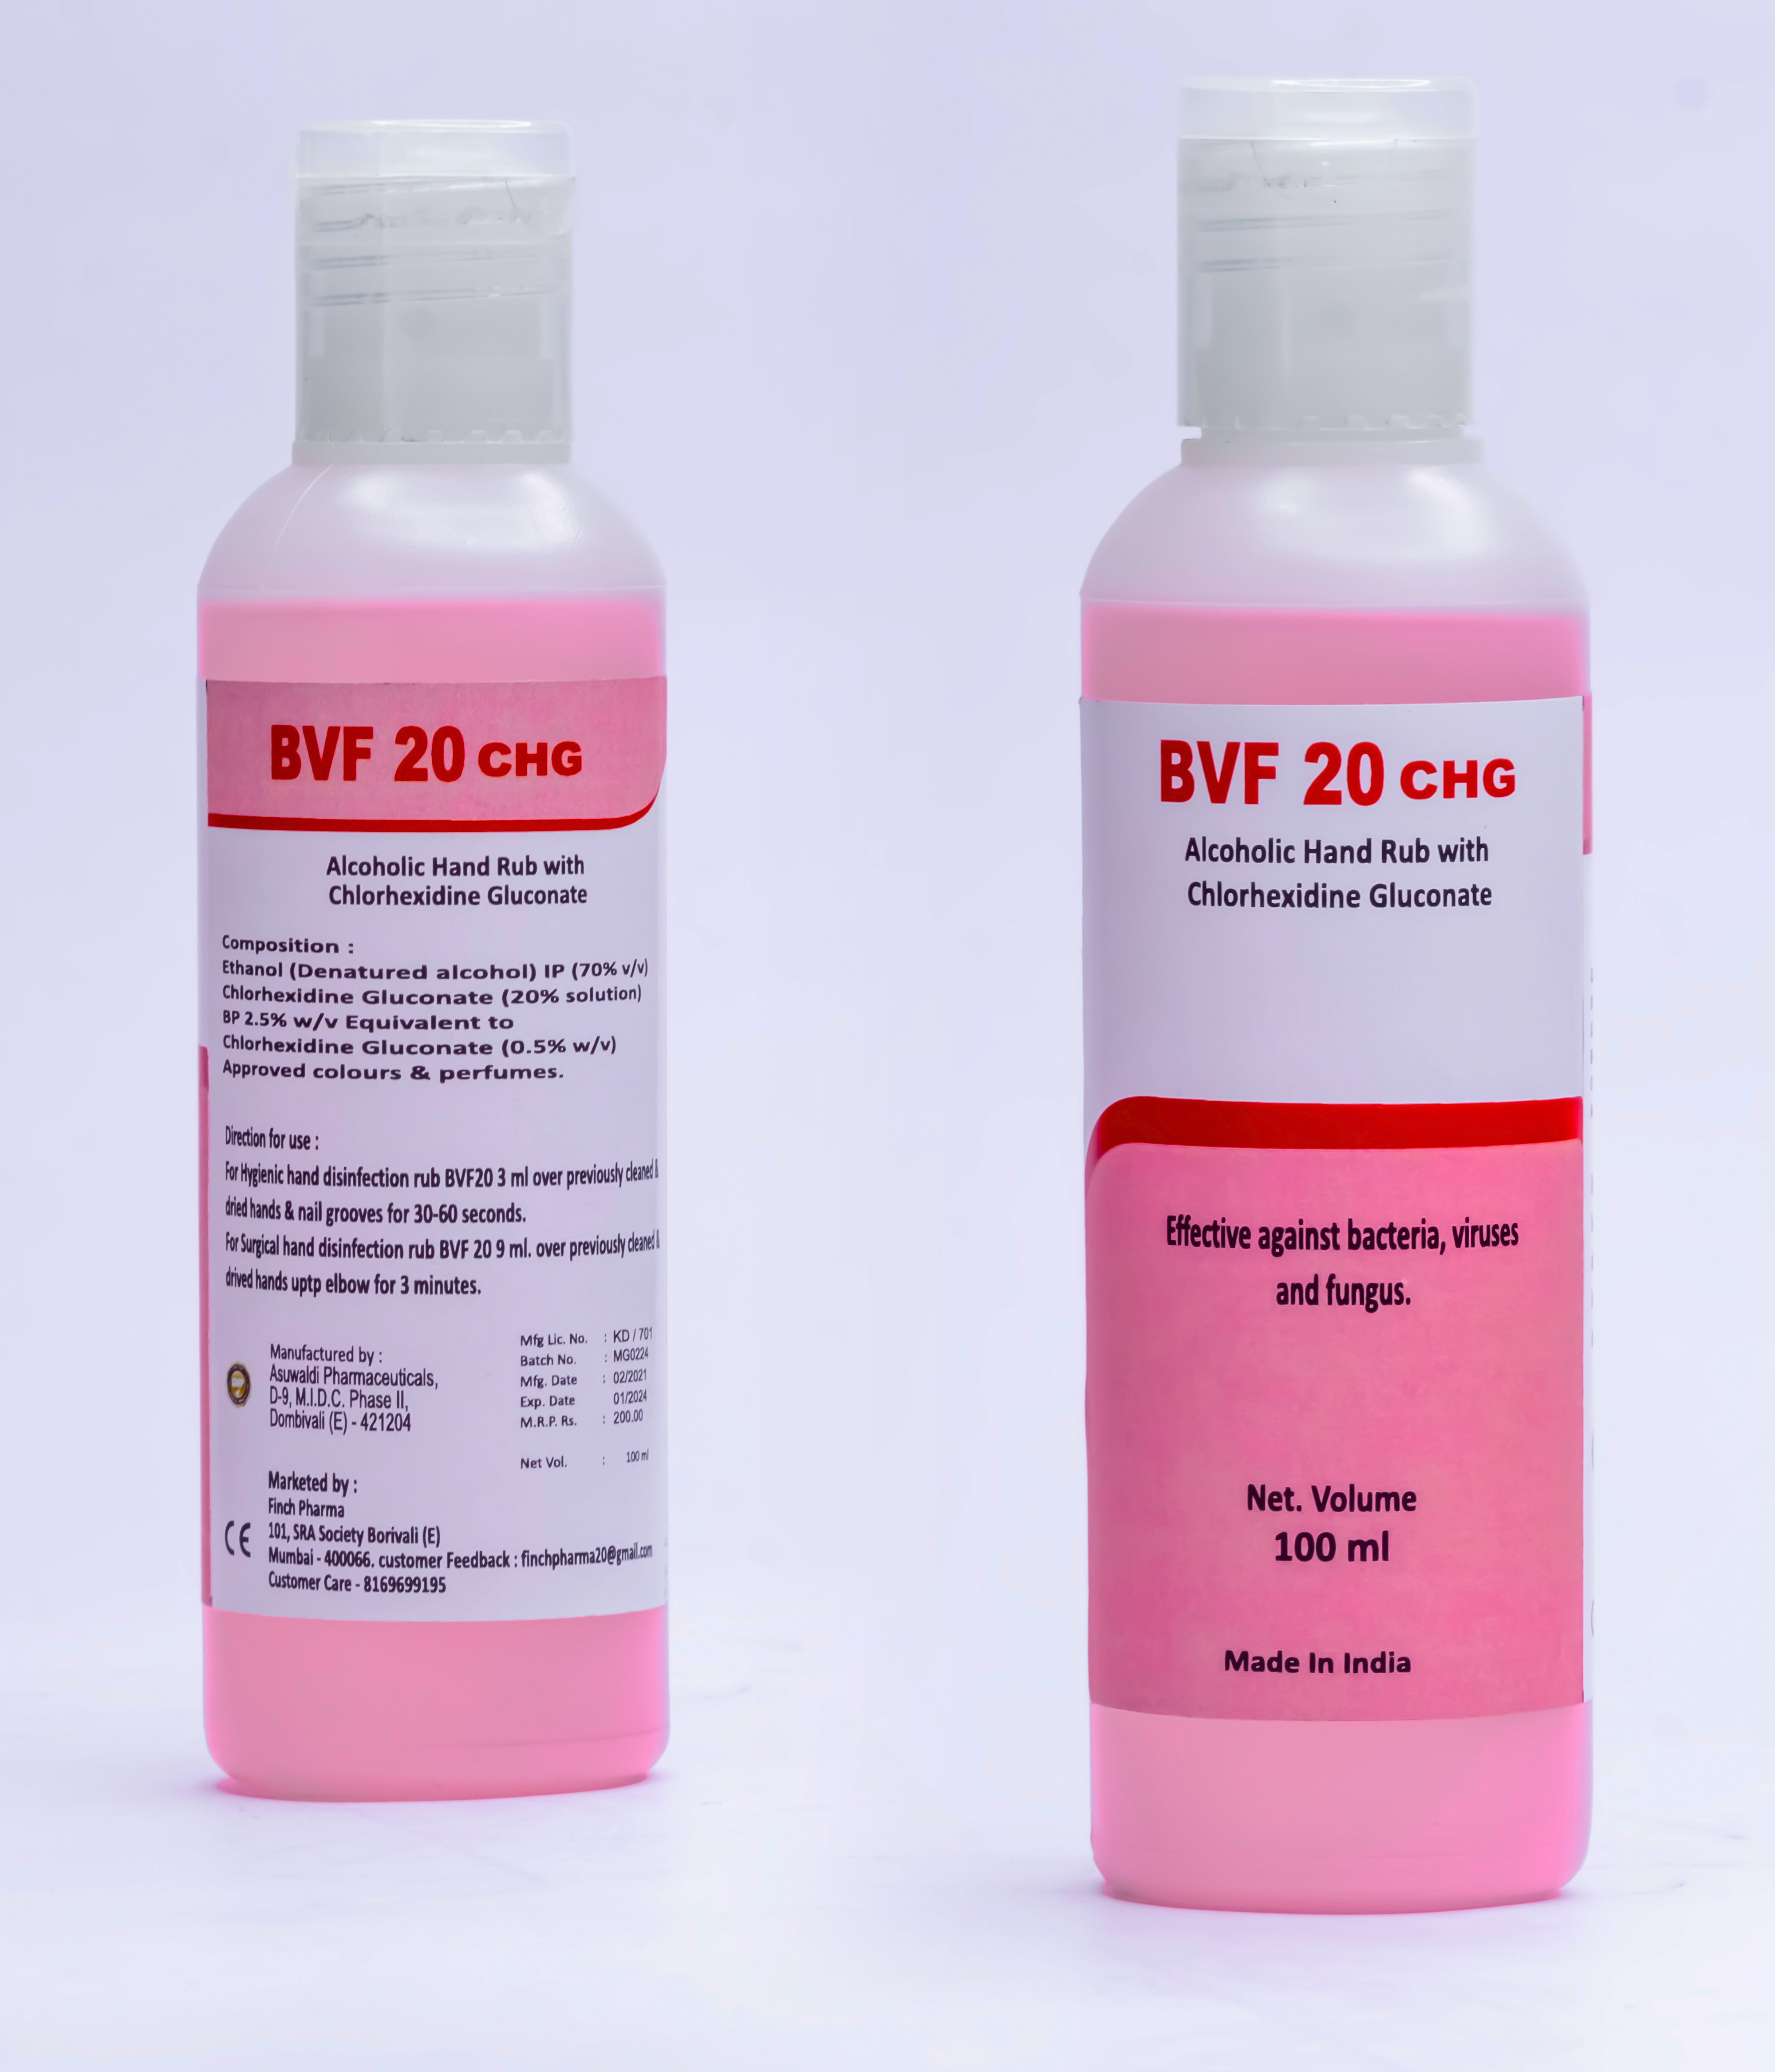 BVF 20 CHG - Alcoholic Hand Rub with Chlorhexidine Gluconate